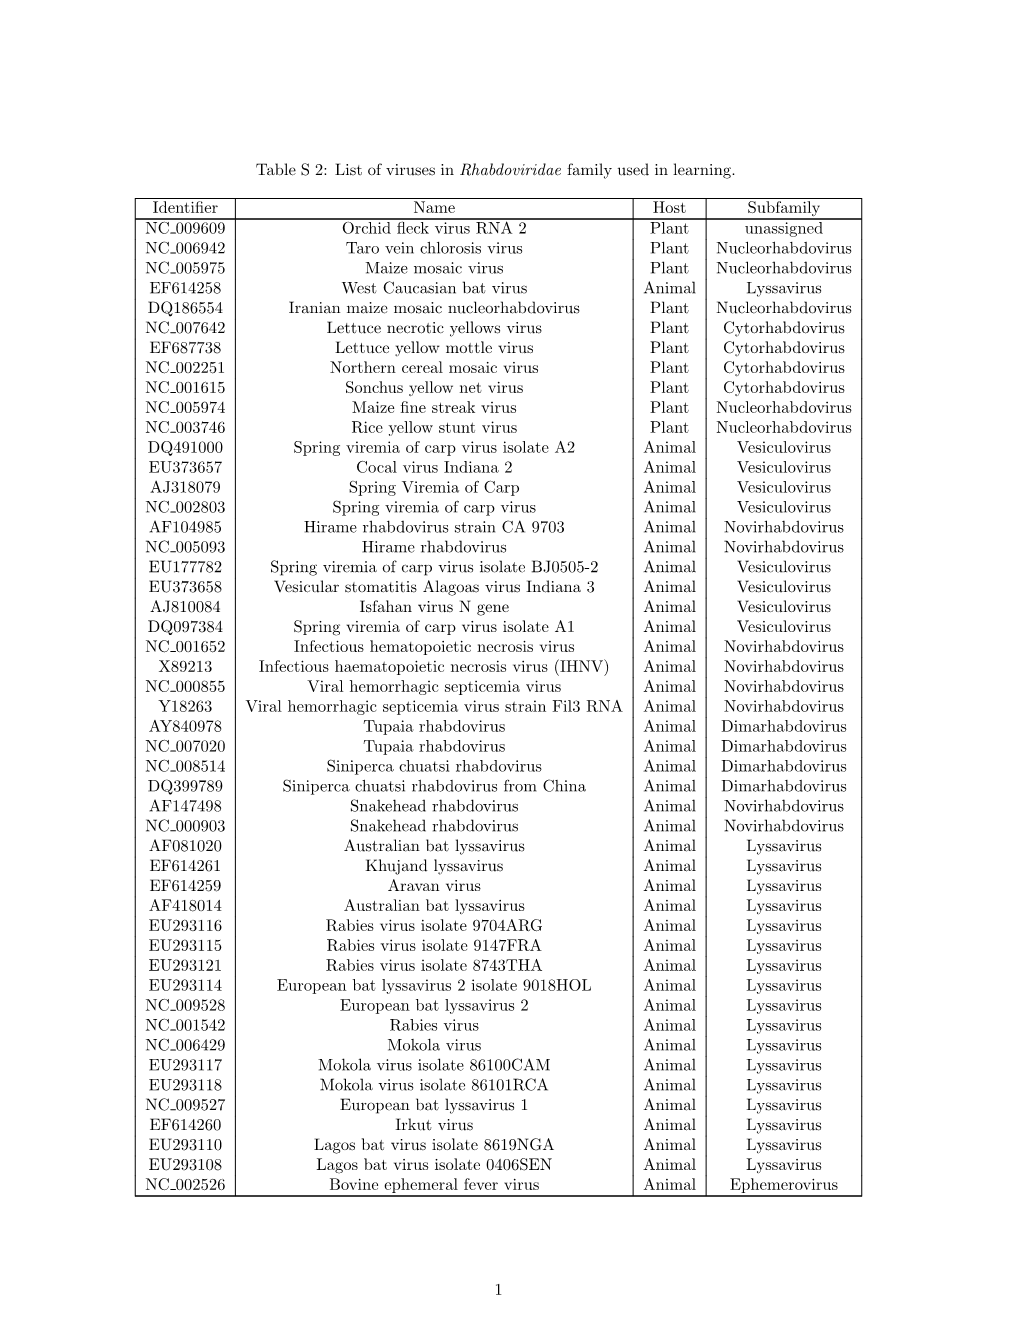 List of Viruses in Rhabdoviridae Family Used in Learning